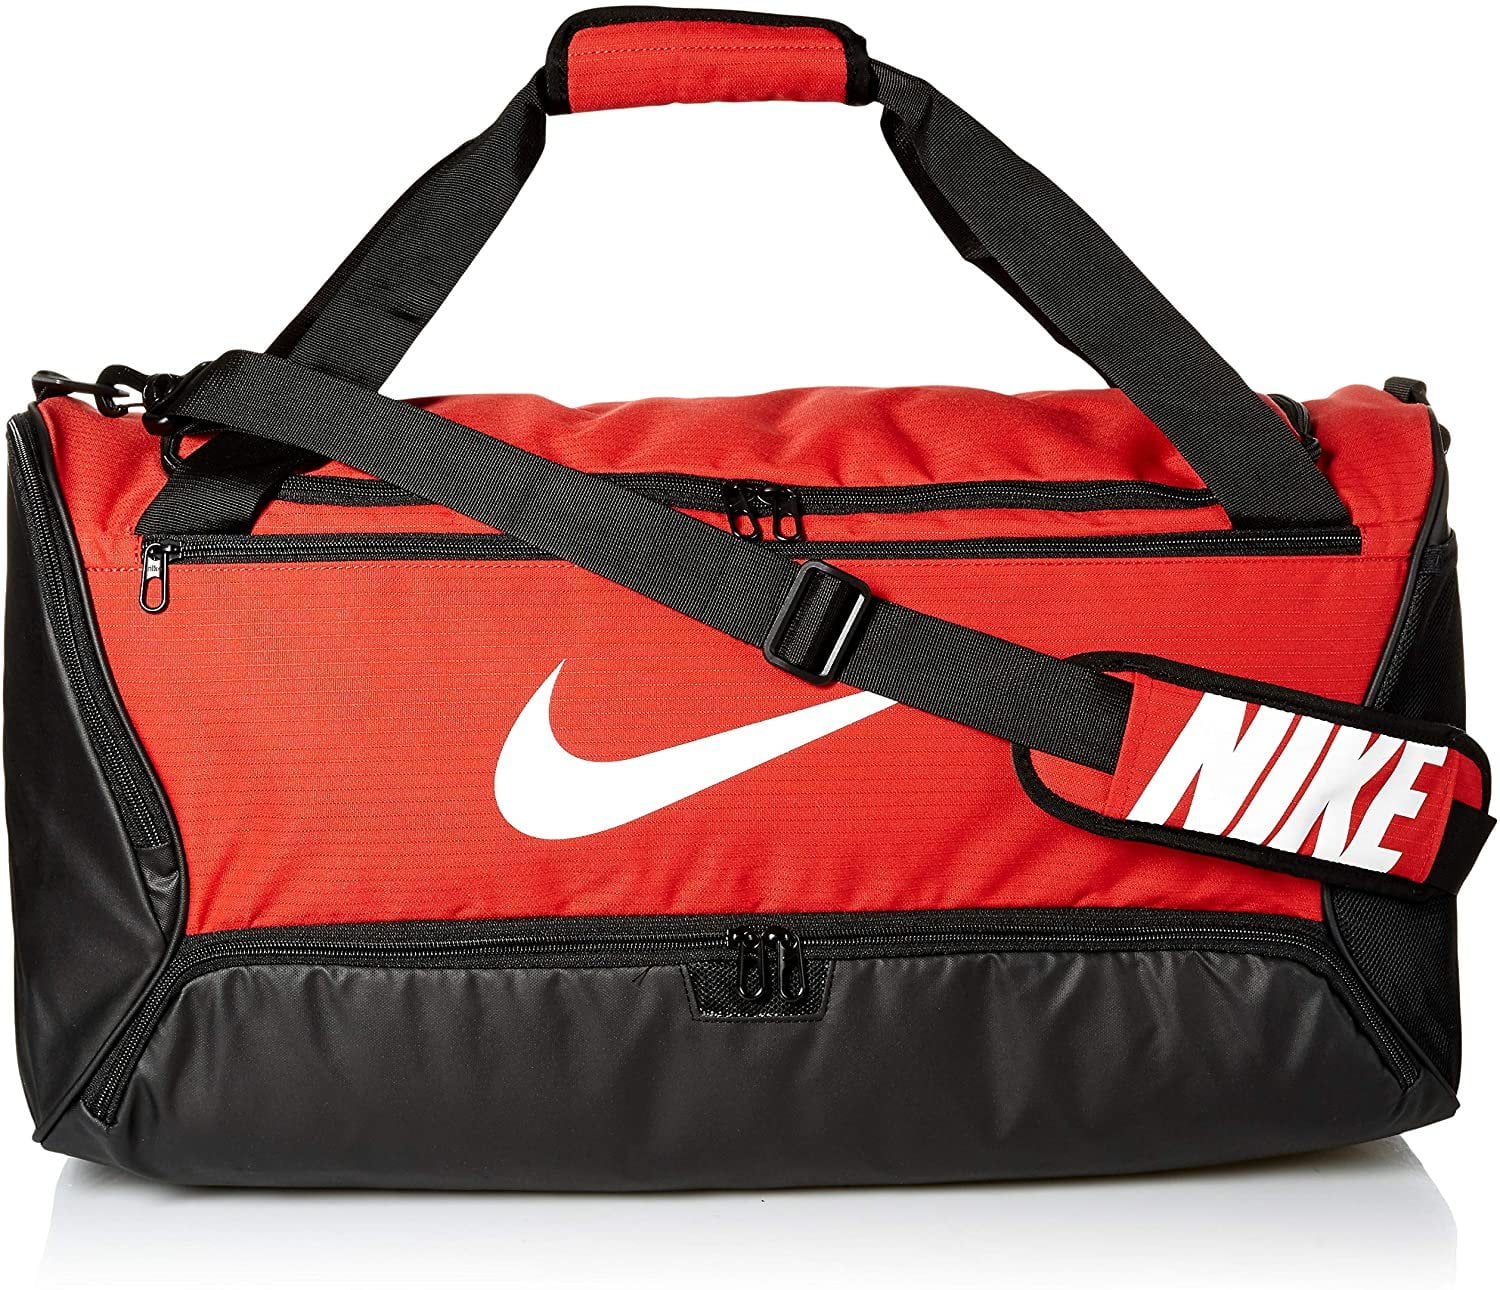 blad Goed opgeleid niet voldoende Nike Brasilia Training Medium Duffle Bag, BA5955 University Red/Black/White  - Walmart.com